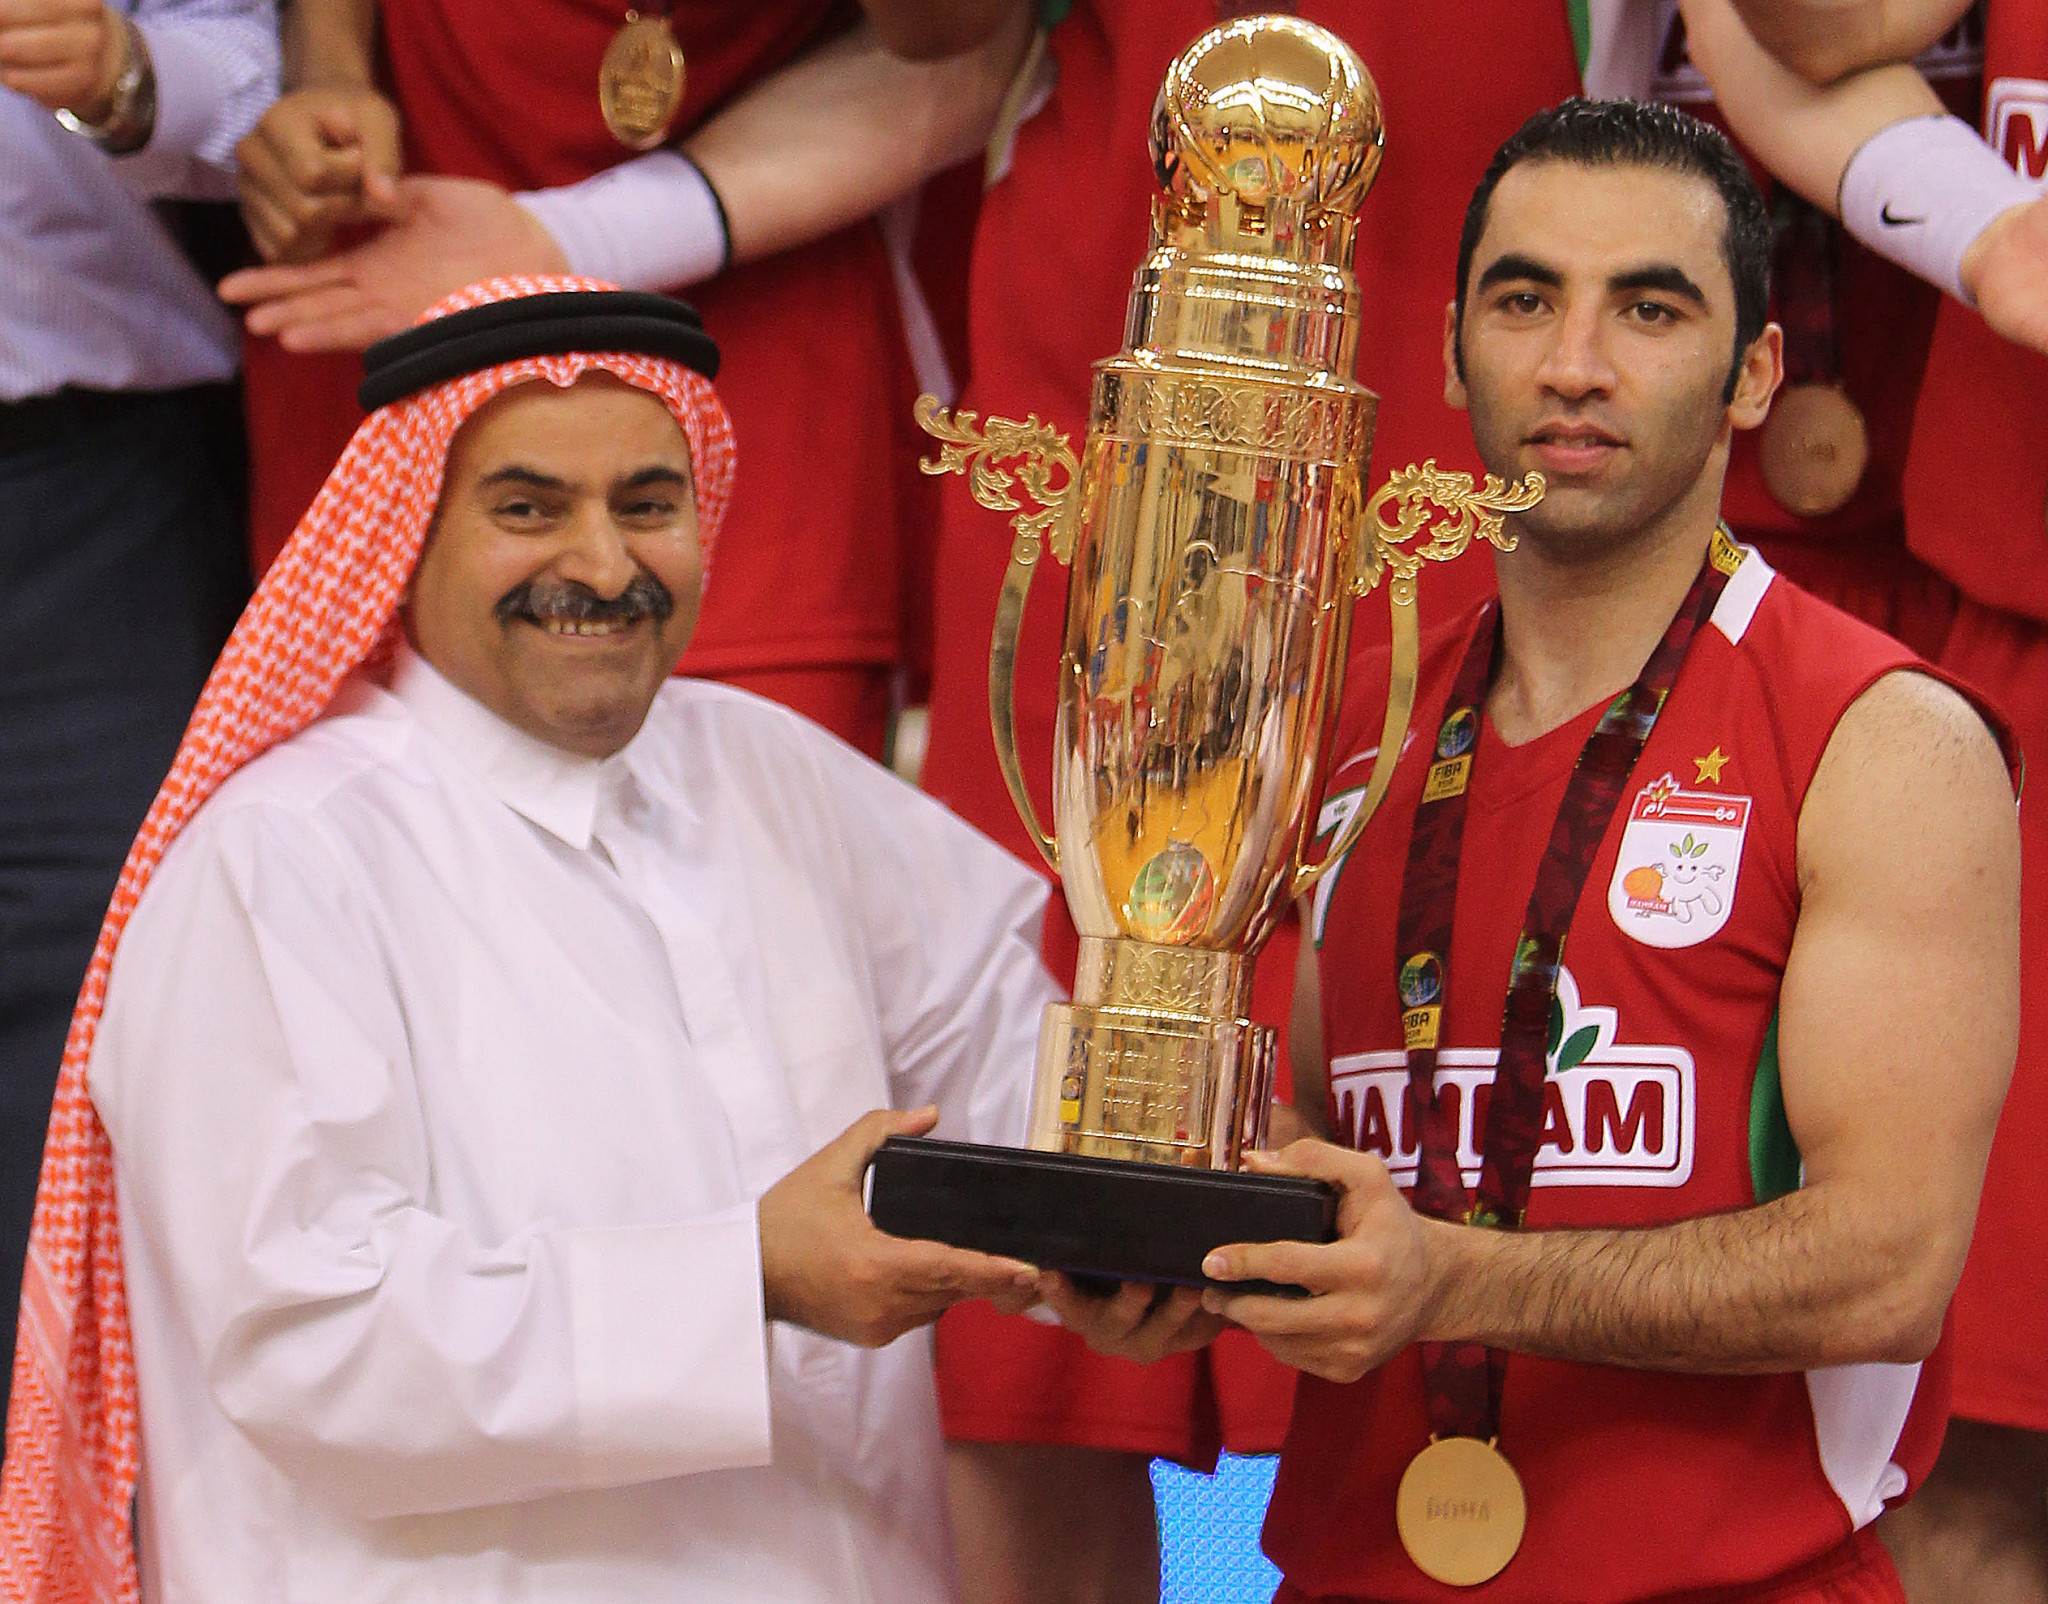 Qatari Sheikh Saud Ali Al Thani has been re-elected as International Basketball Federation President ©Getty Images